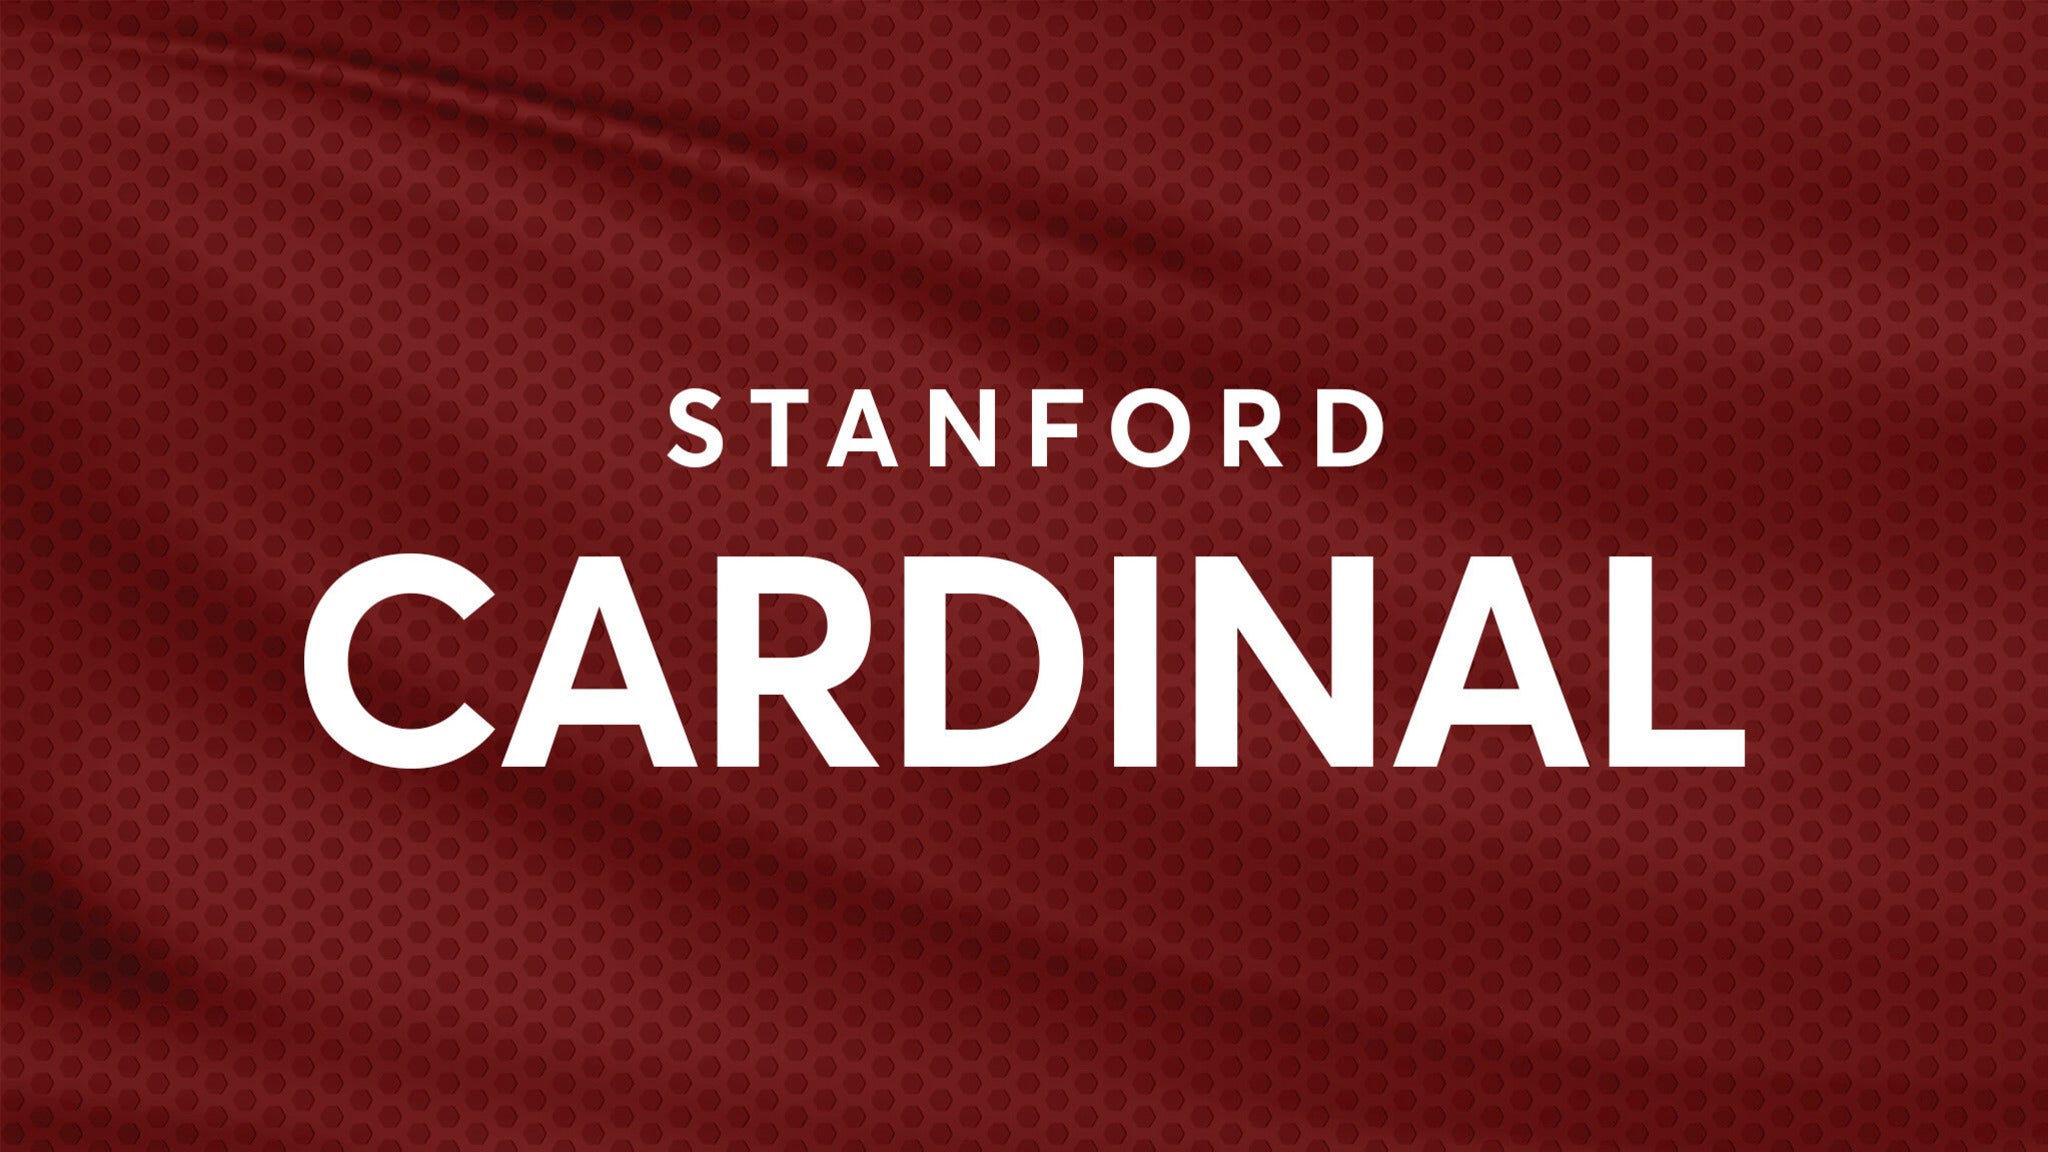 Stanford Cardinal Football vs. Arizona Wildcats Football